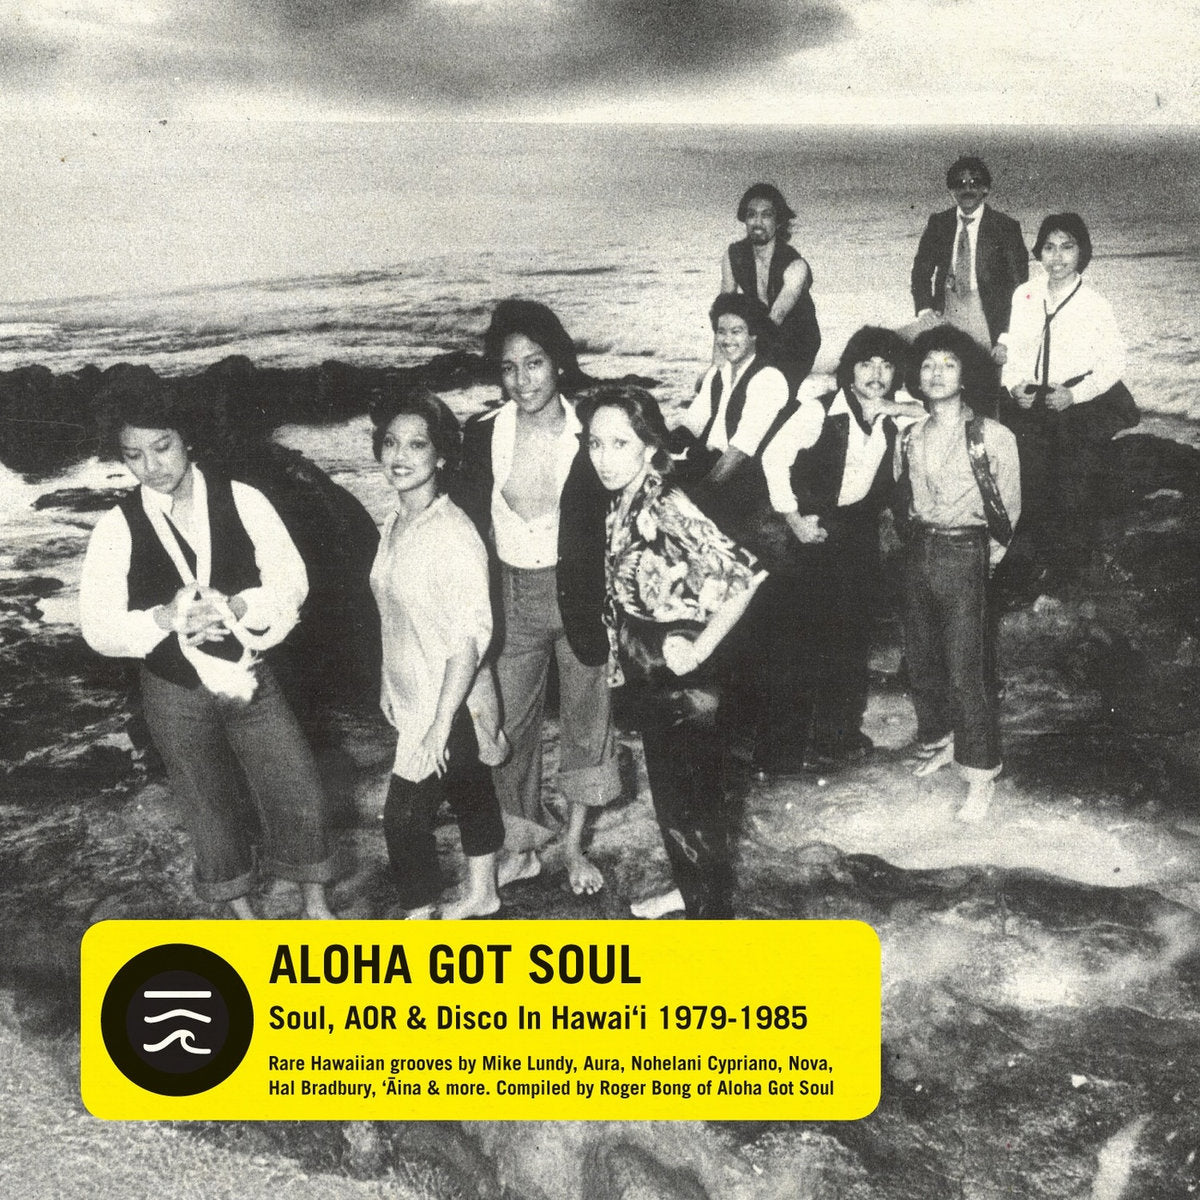 VARIOUS - Aloha Got Soul - Soul, AOR and Disco in Hawaii 1979-1985 - 2LP - Yellow Vinyl